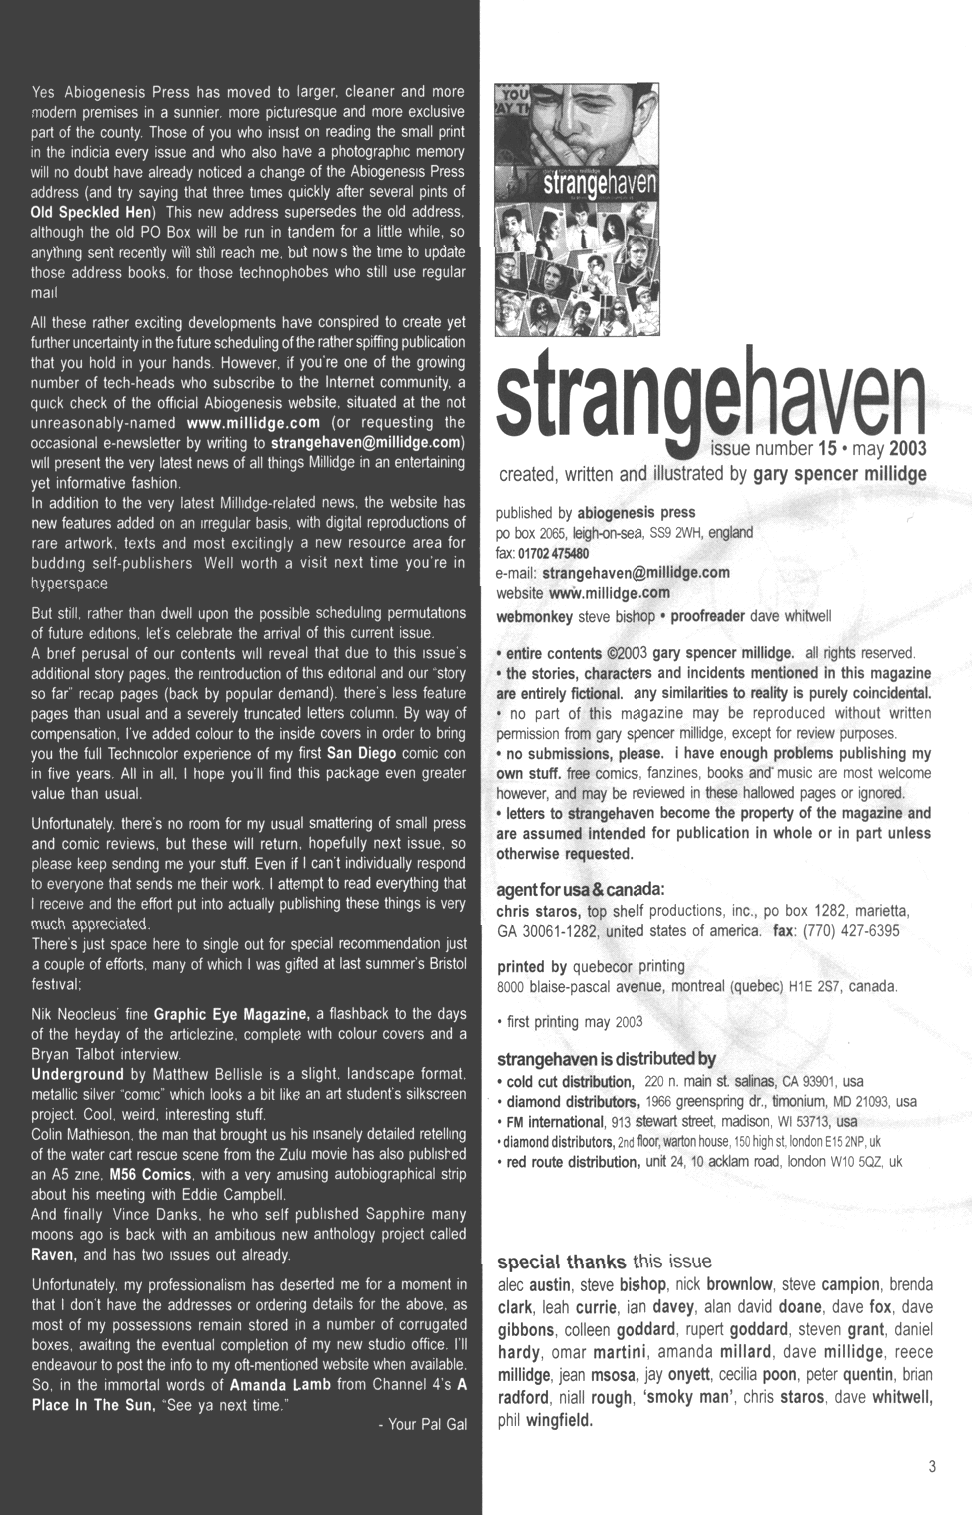 Read online Strangehaven comic -  Issue #15 - 3